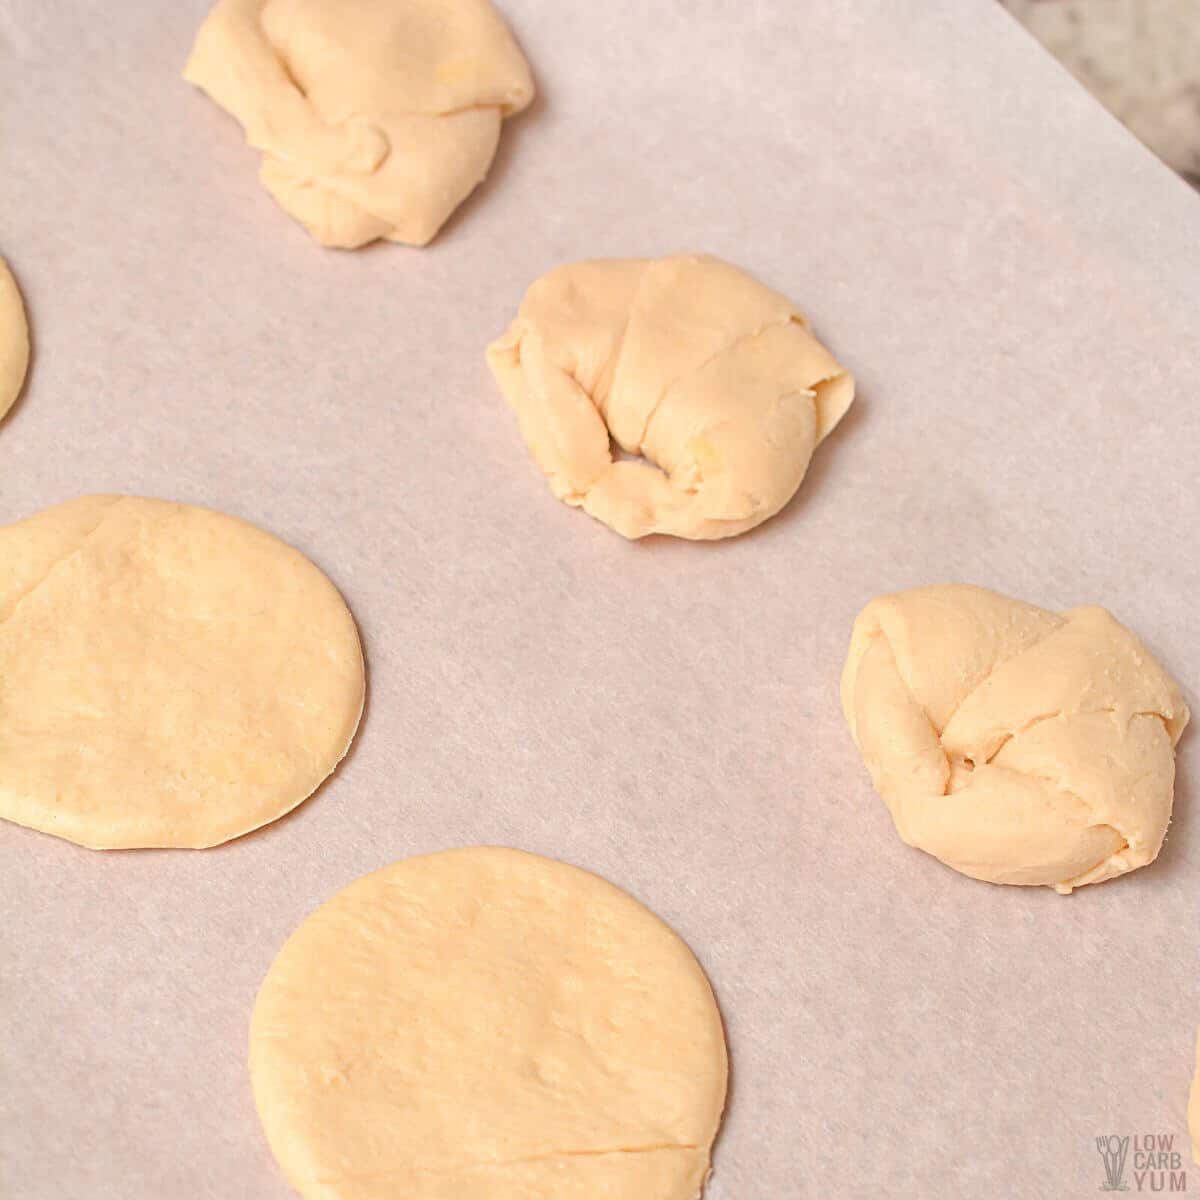 shaping the keto croissant dough.